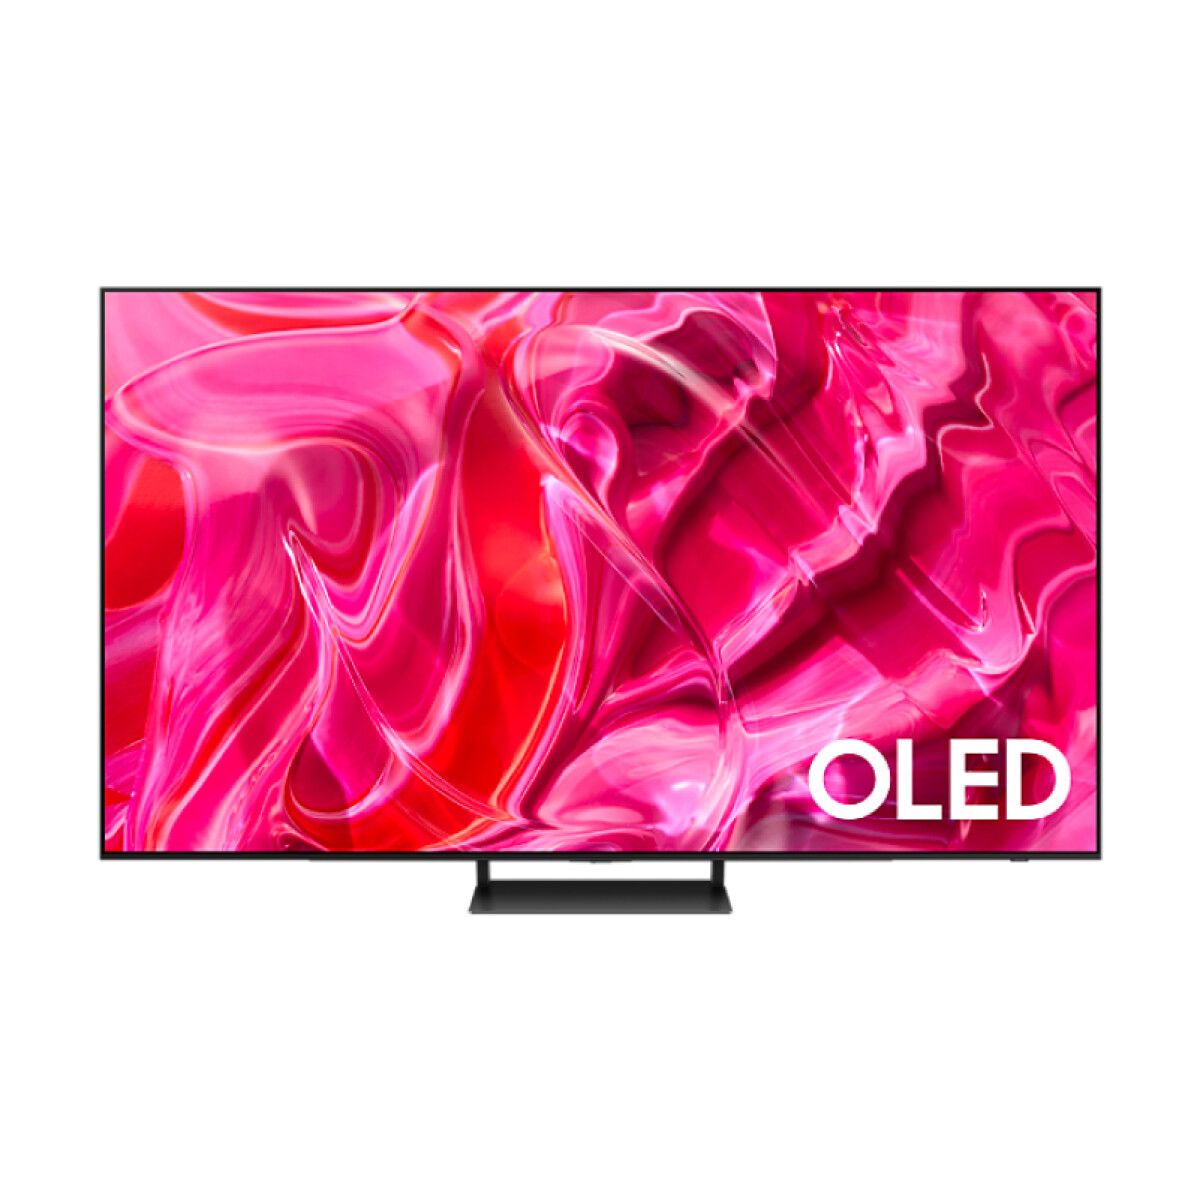 Smart TV Samsung 77" OLED 4K QN77S90CA 